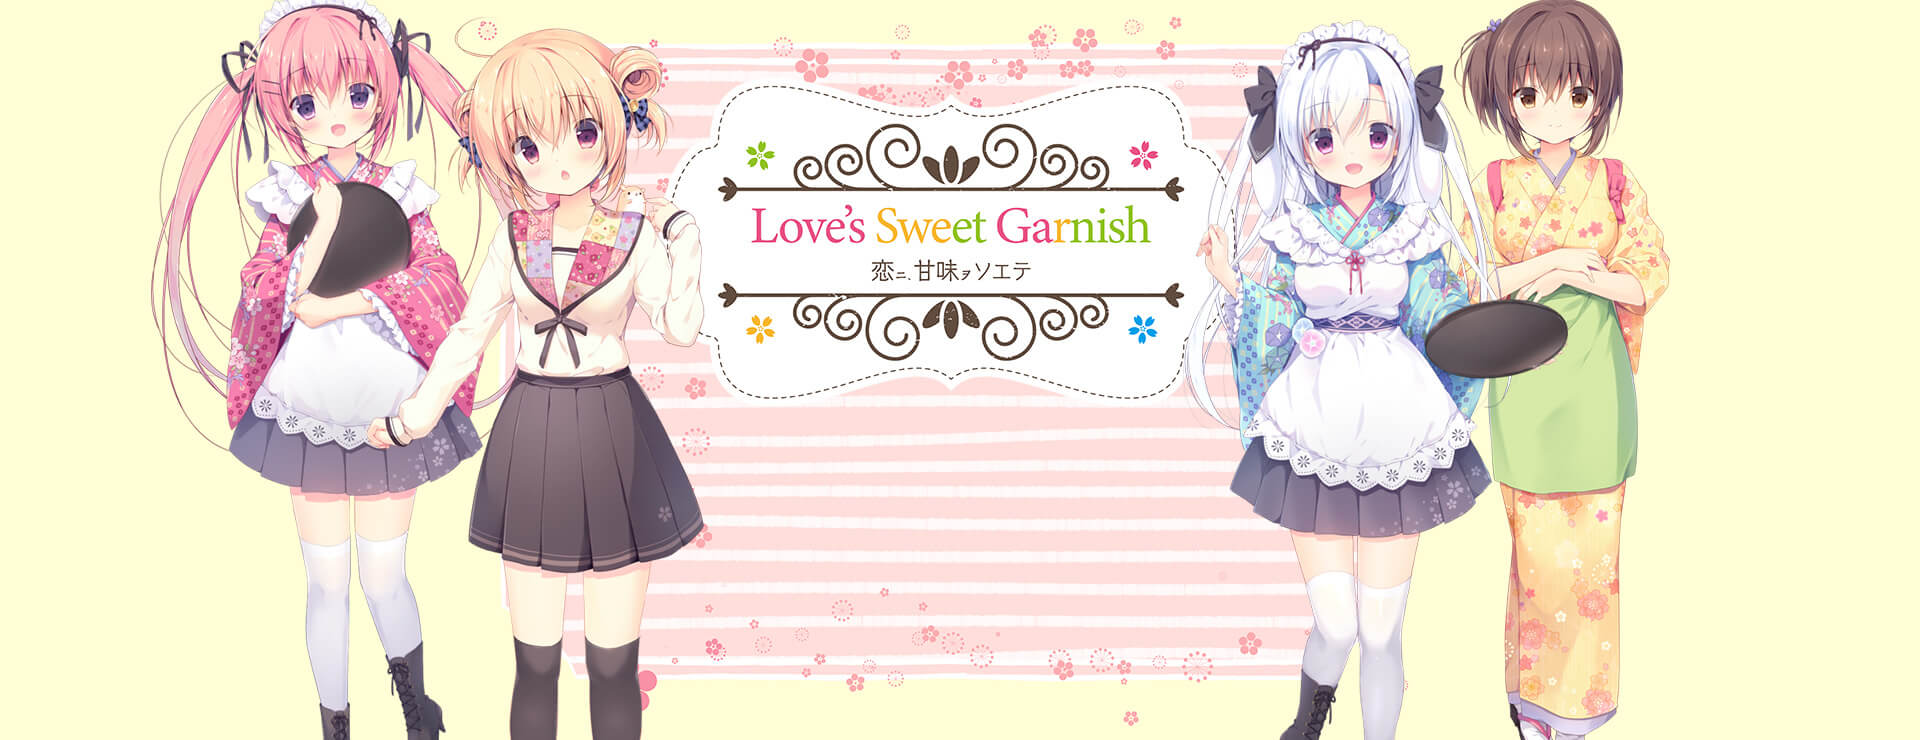 Love's Sweet Garnish - ビジュアルノベル ゲーム